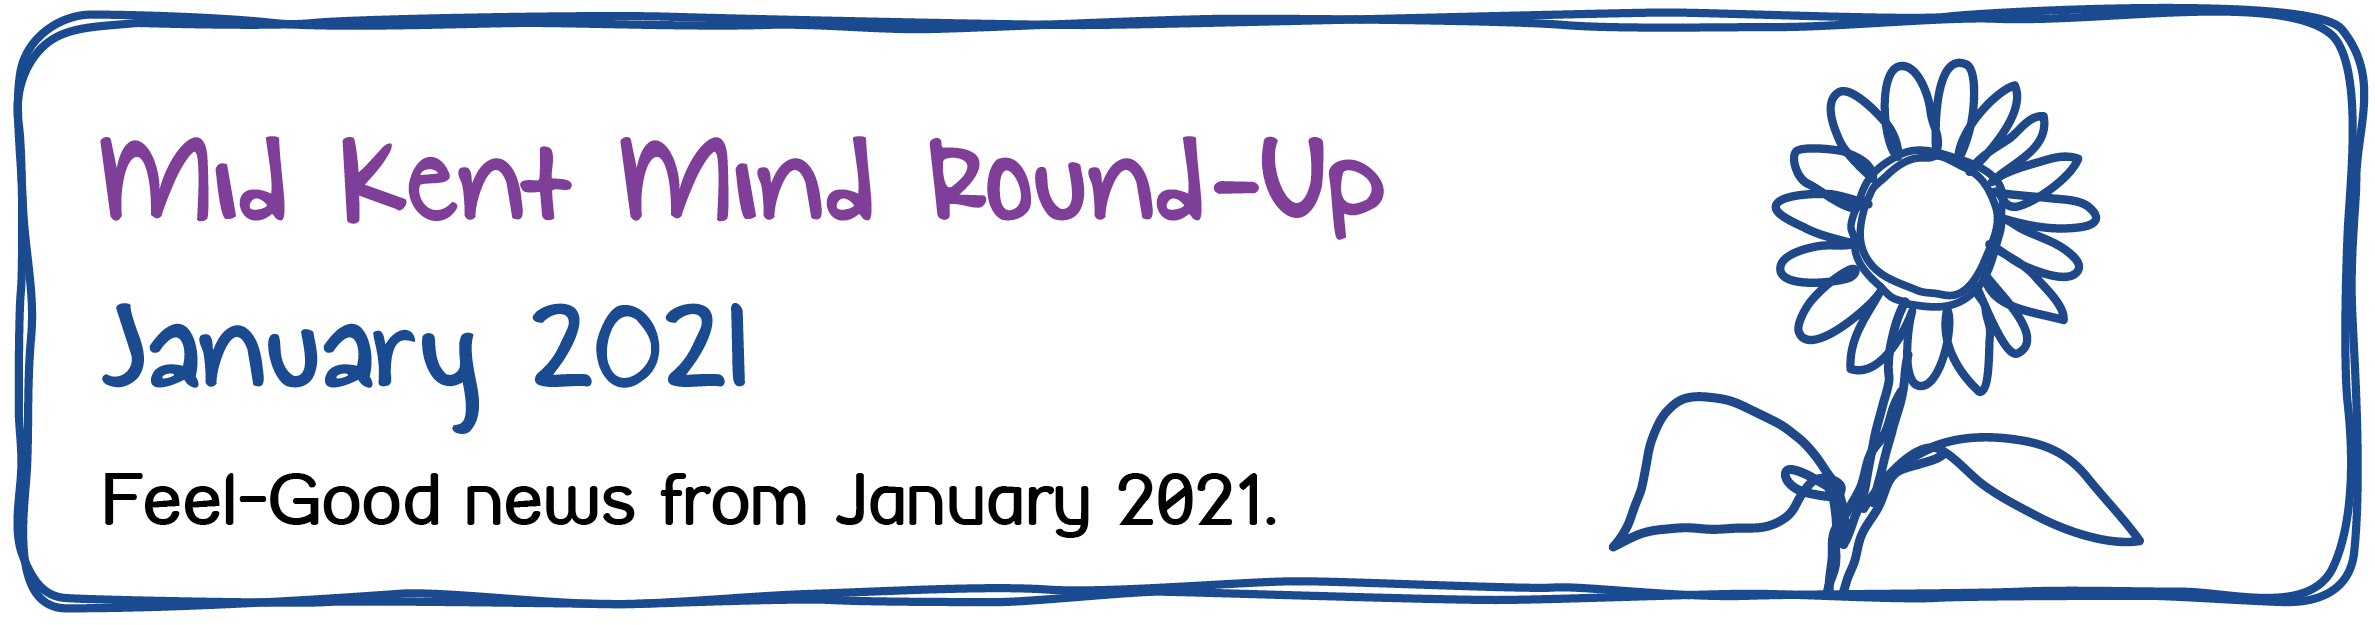 Mid Kent Mind Newsletter - January 2021 - Mid Kent Mind Roun-Up. January 2021. Feel-Good news from January 2021.